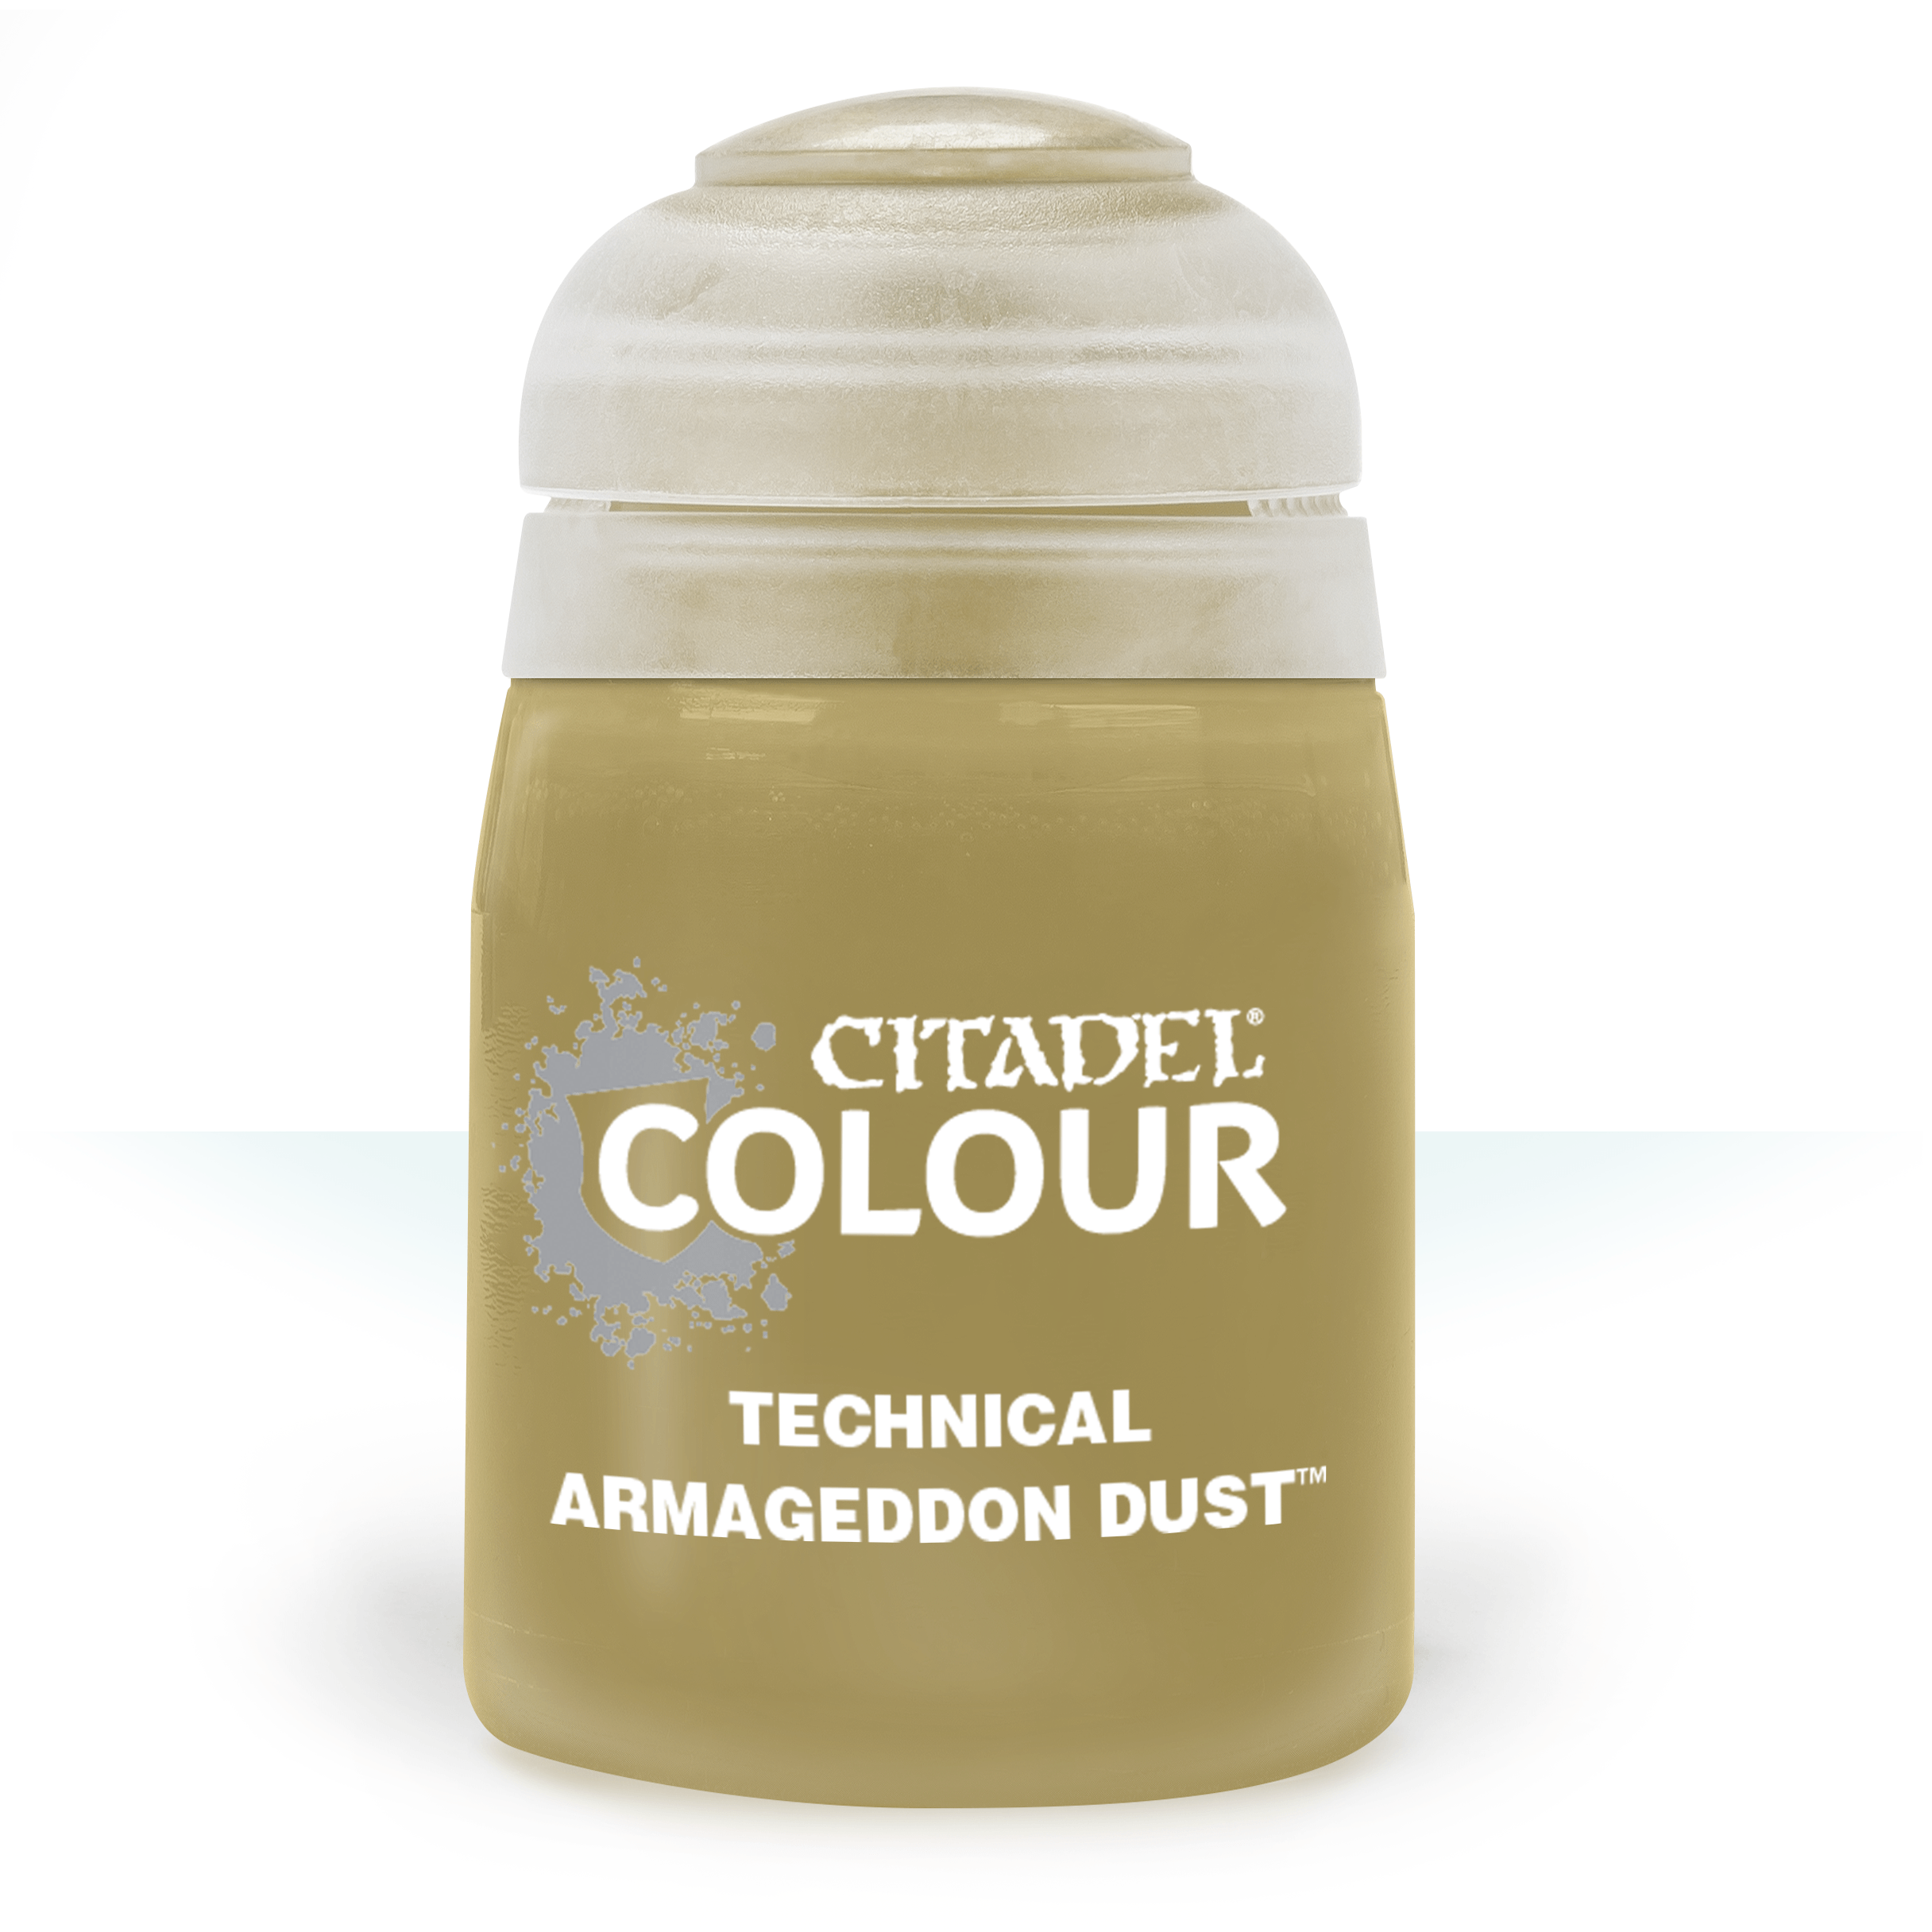 Technical Armageddon Dust - Citadel Colour